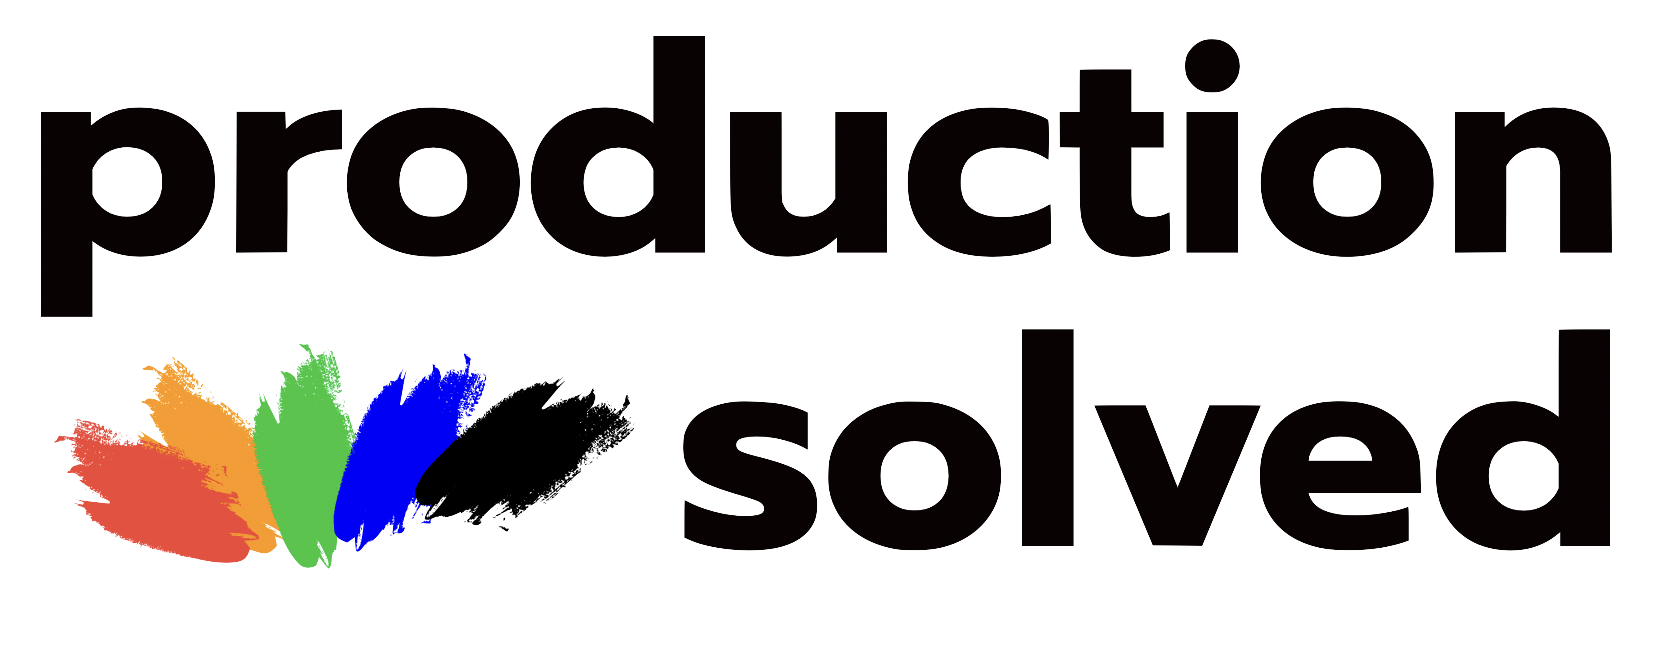 production solved black text transparent background logo